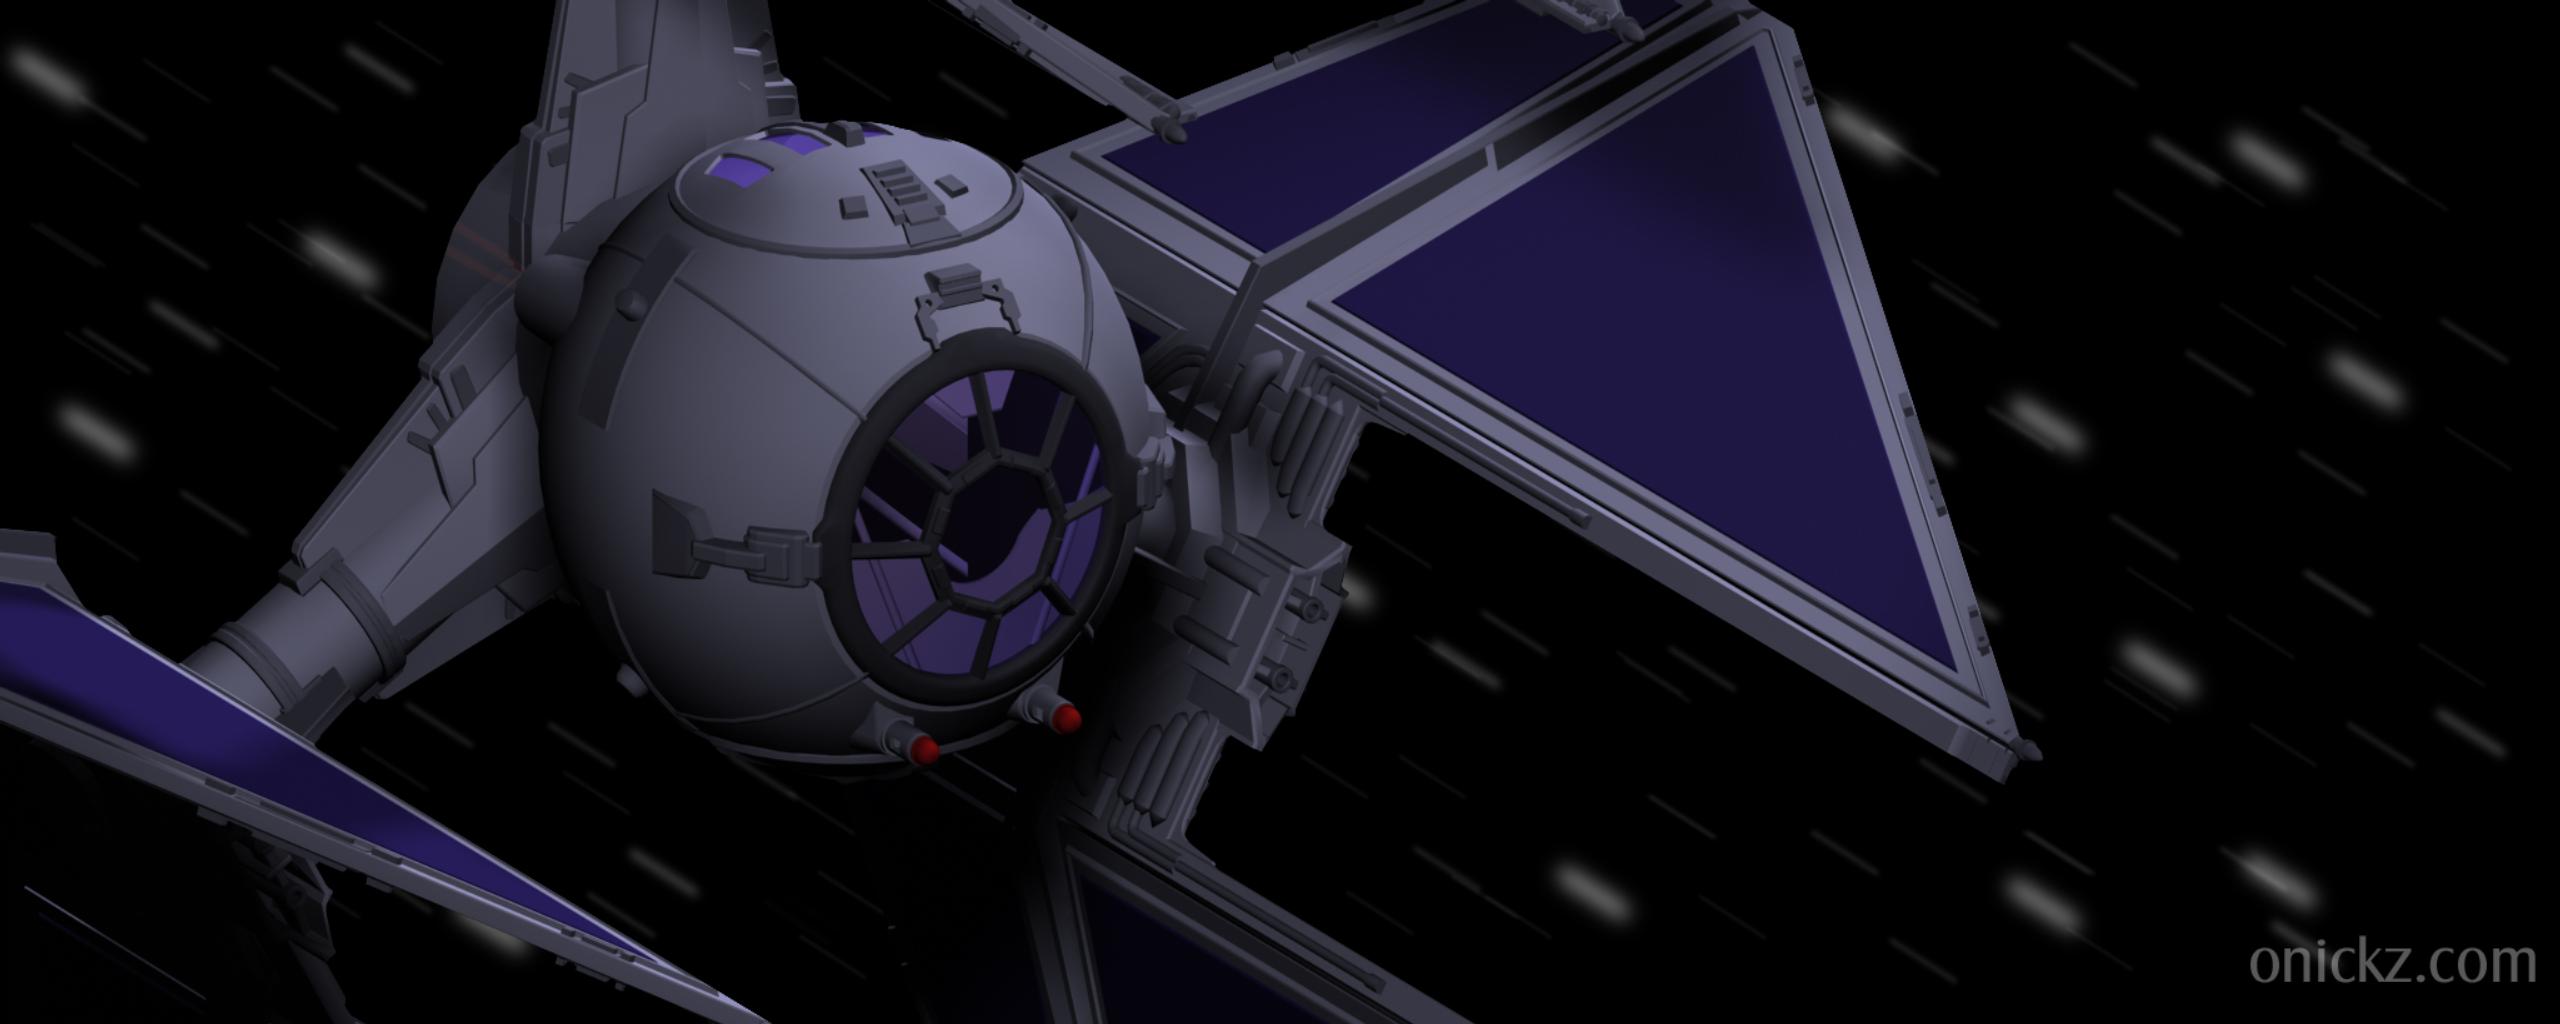 Star Wars TIE/D Defender starship in high-definition desktop wallpaper.